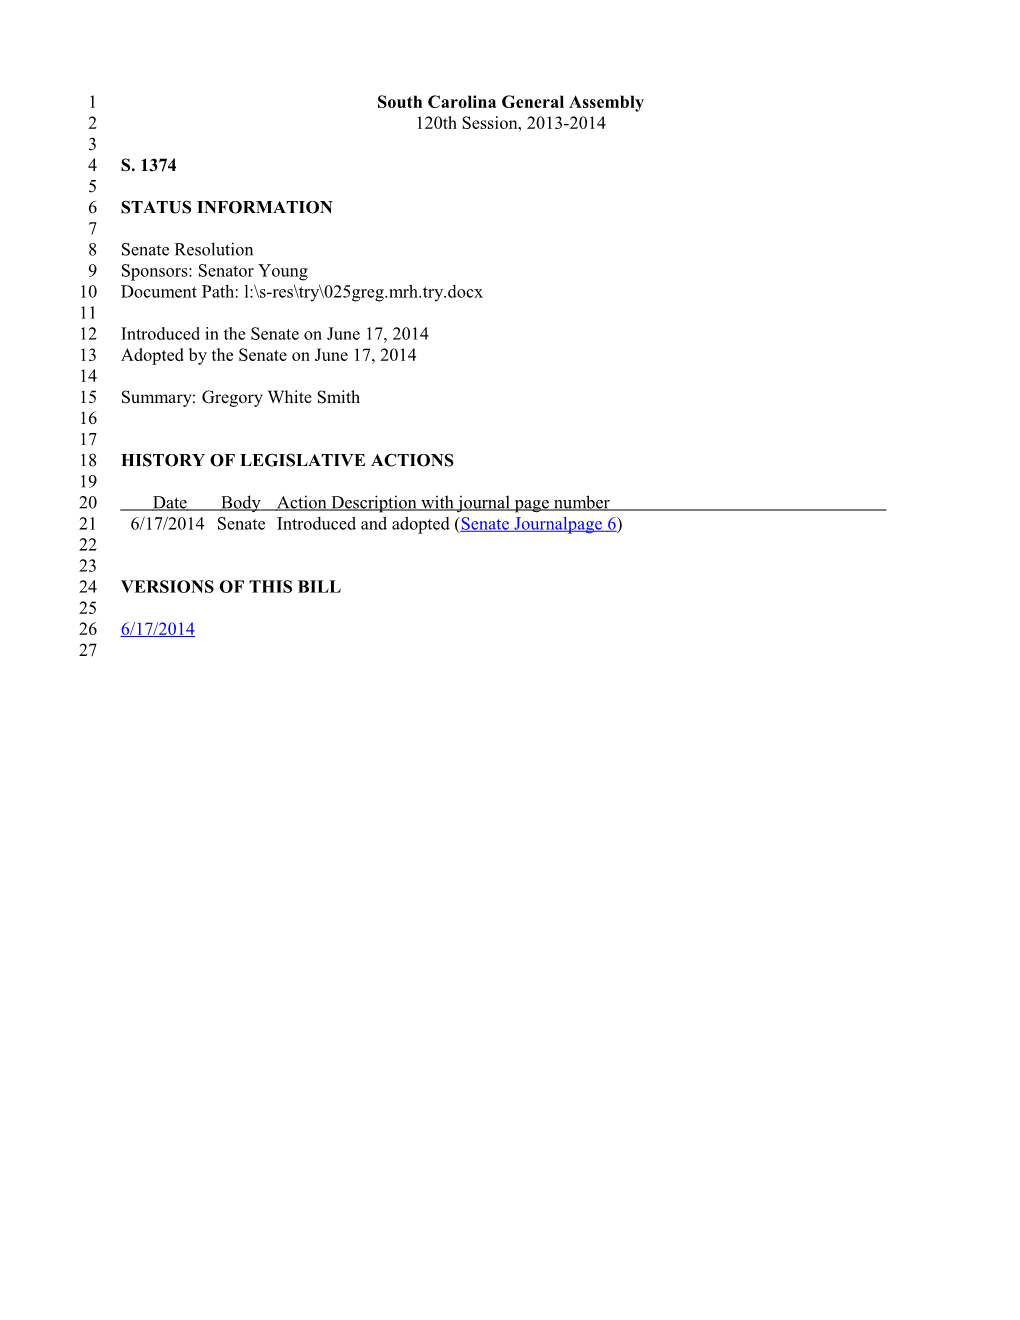 2013-2014 Bill 1374: Gregory White Smith - South Carolina Legislature Online